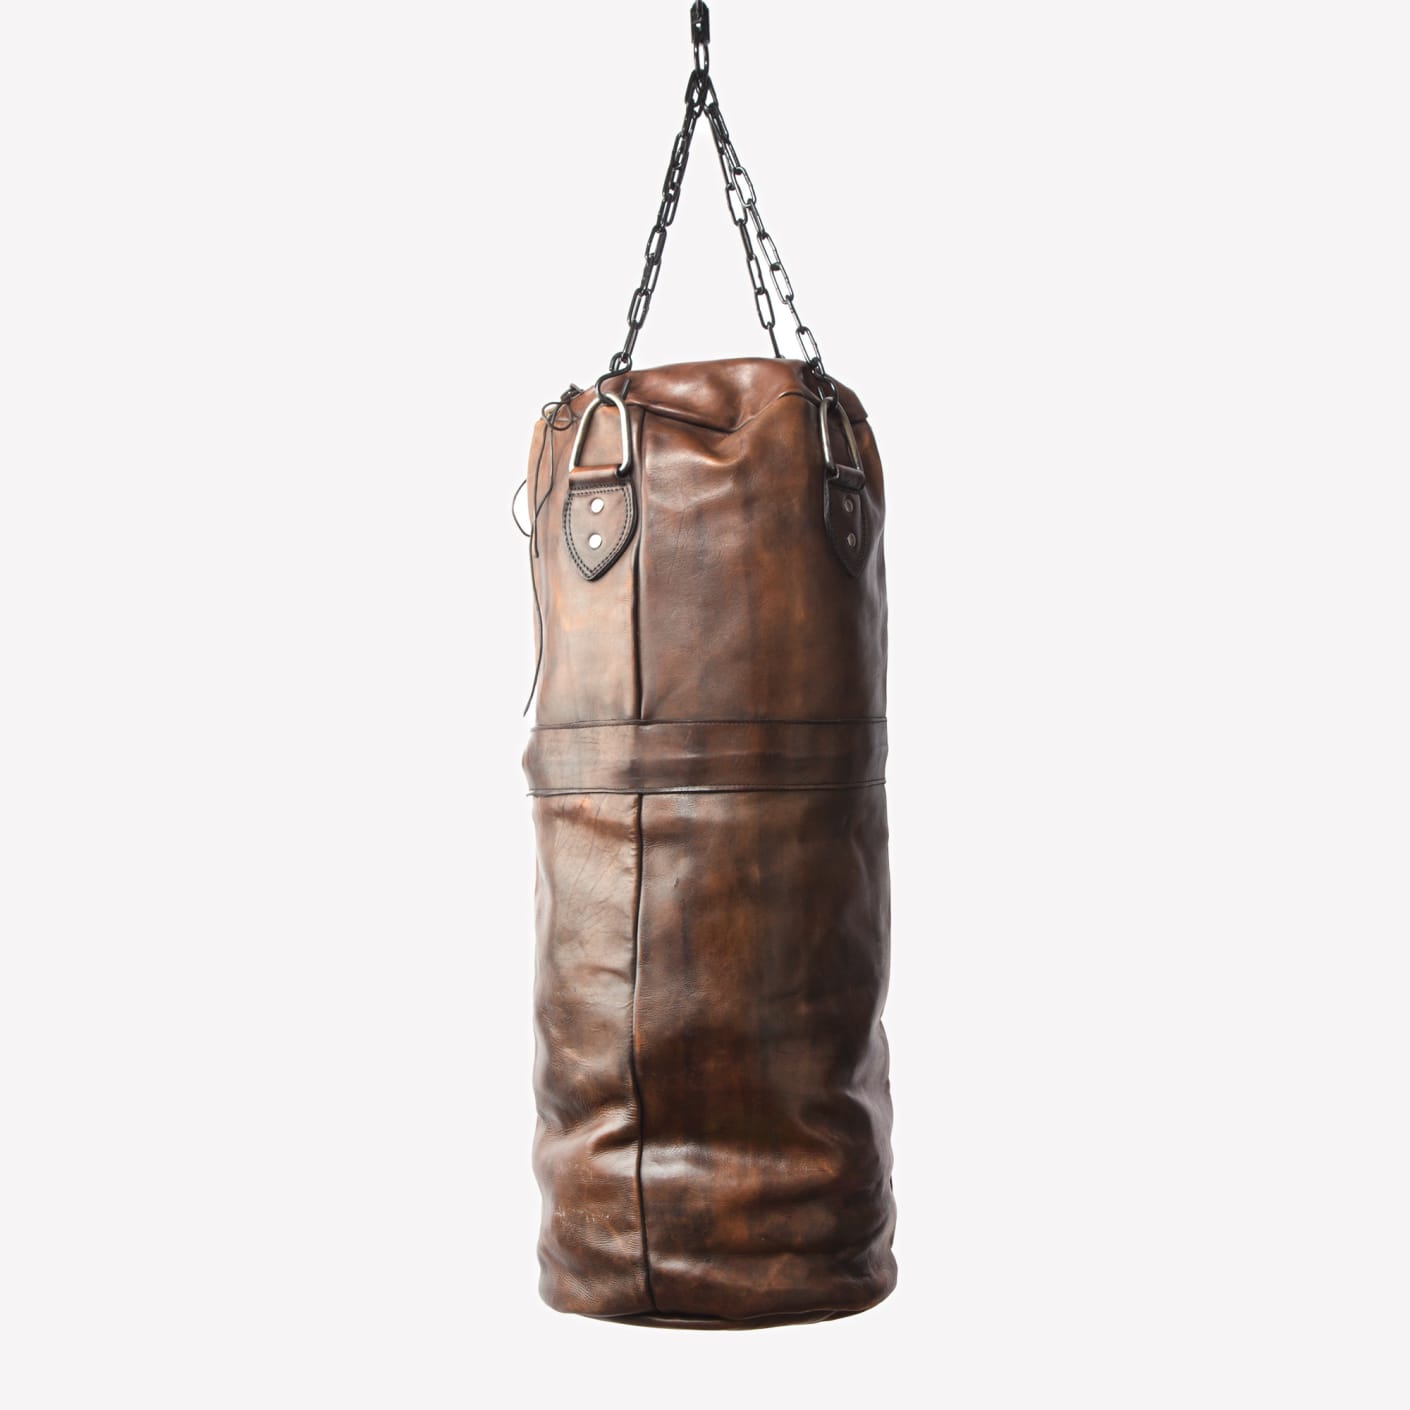 John Woodbridge & Sons Vintage Style Punching Bag | Bespoke Post